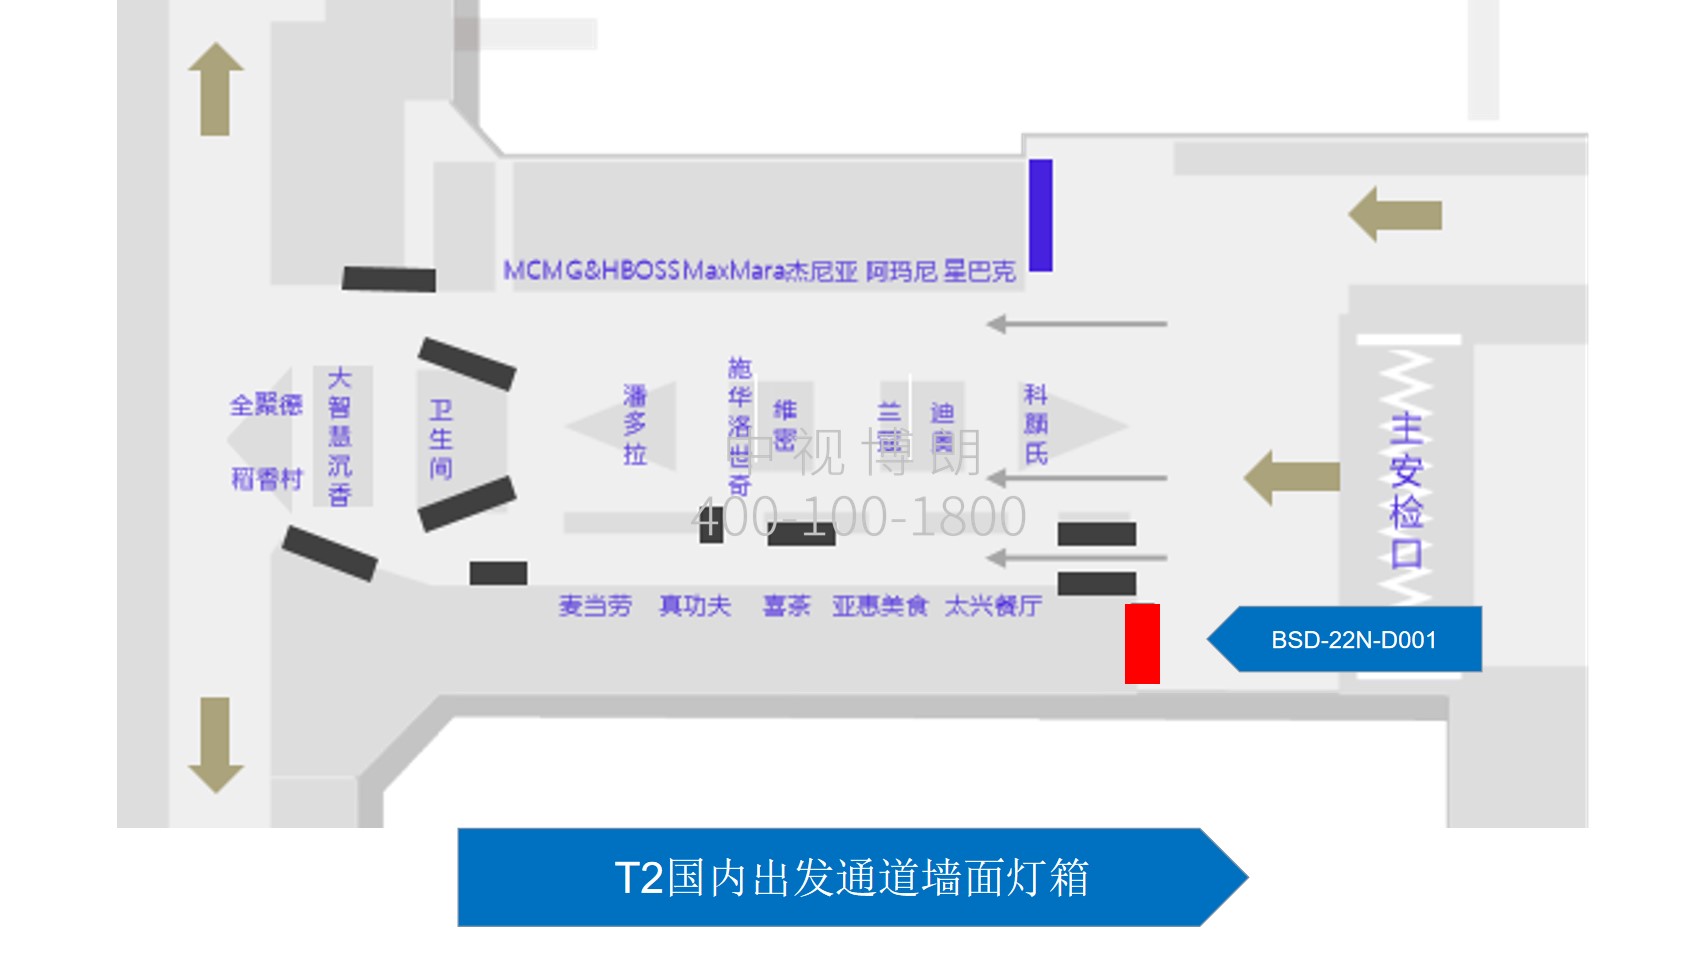 北京首都机场广告-T2 Domestic VIP Security Check Wall Light Box位置图